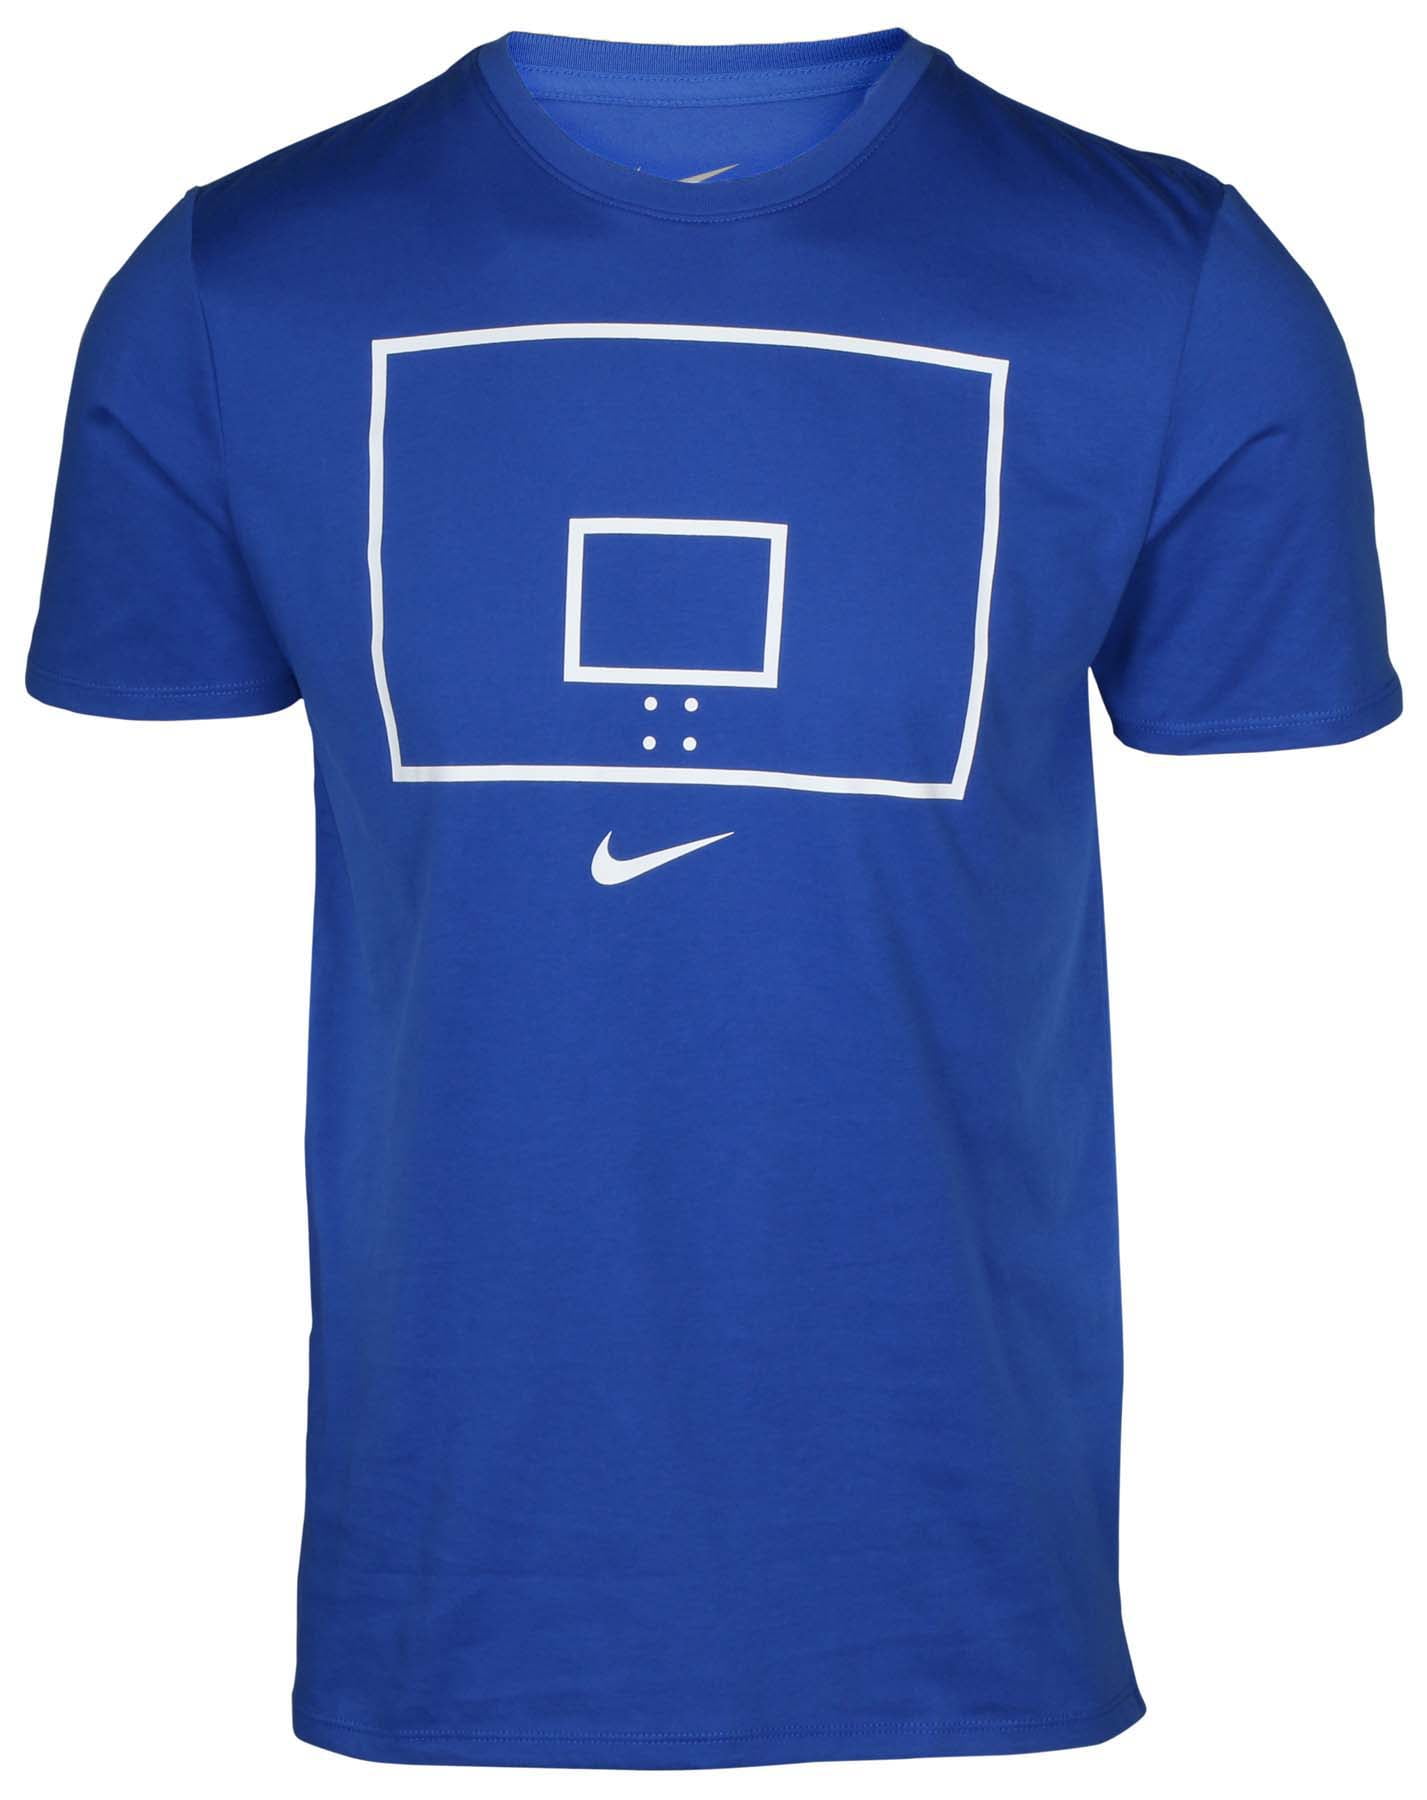 Nike - Men's Dri-Fit Hoop Arrow Basketball T-Shirt-Blue - Walmart.com ...